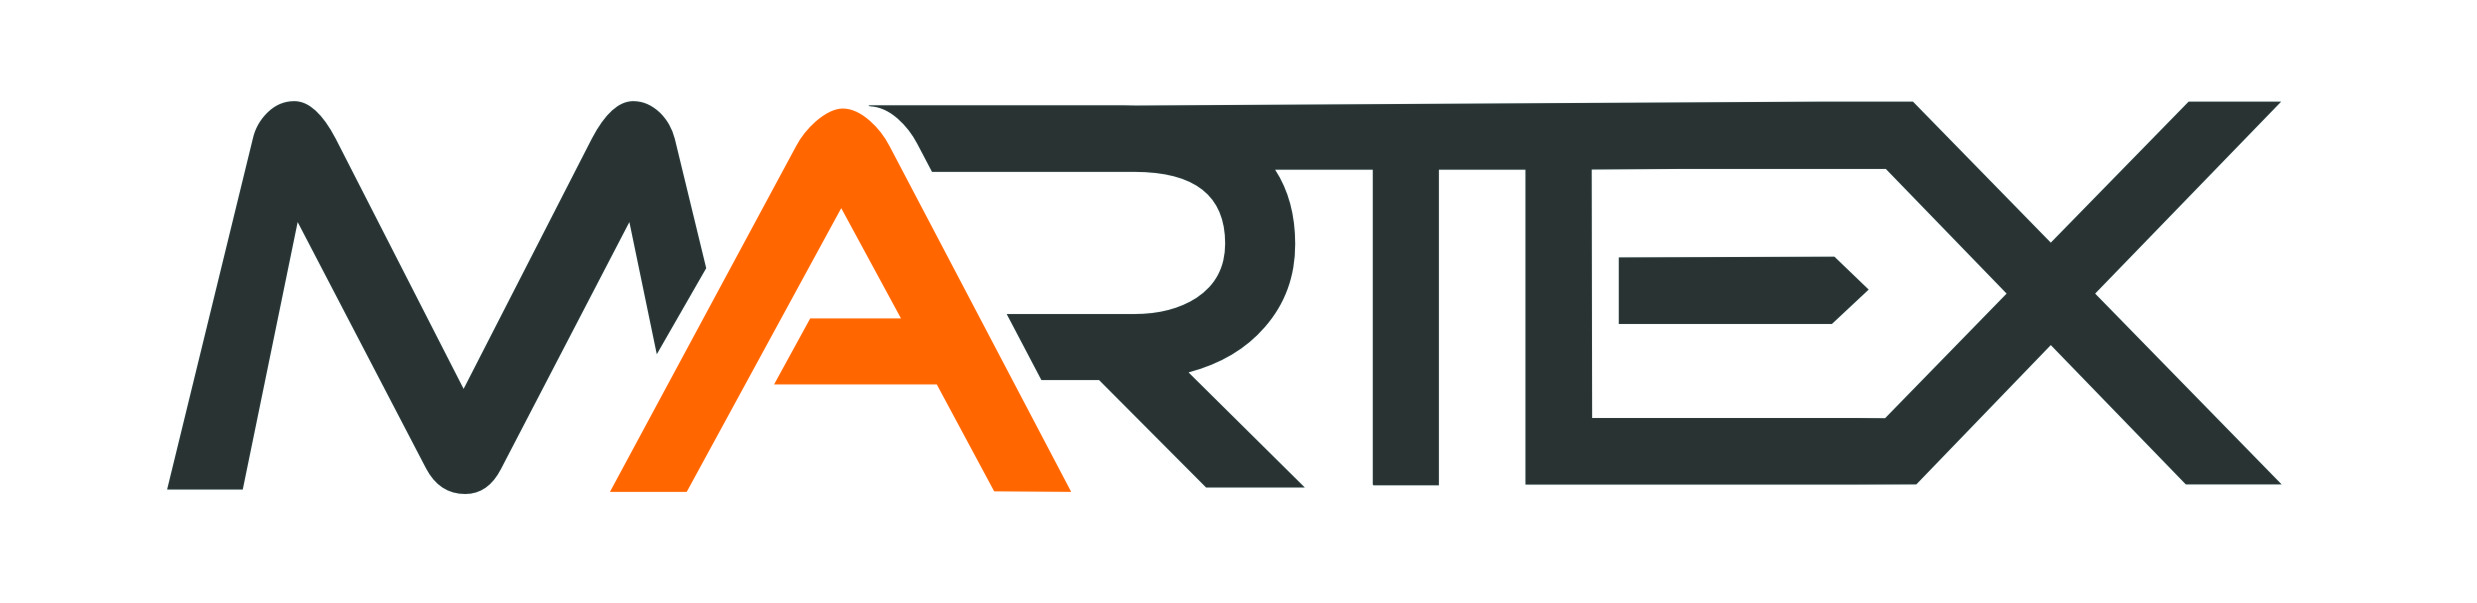 Martex_logo2